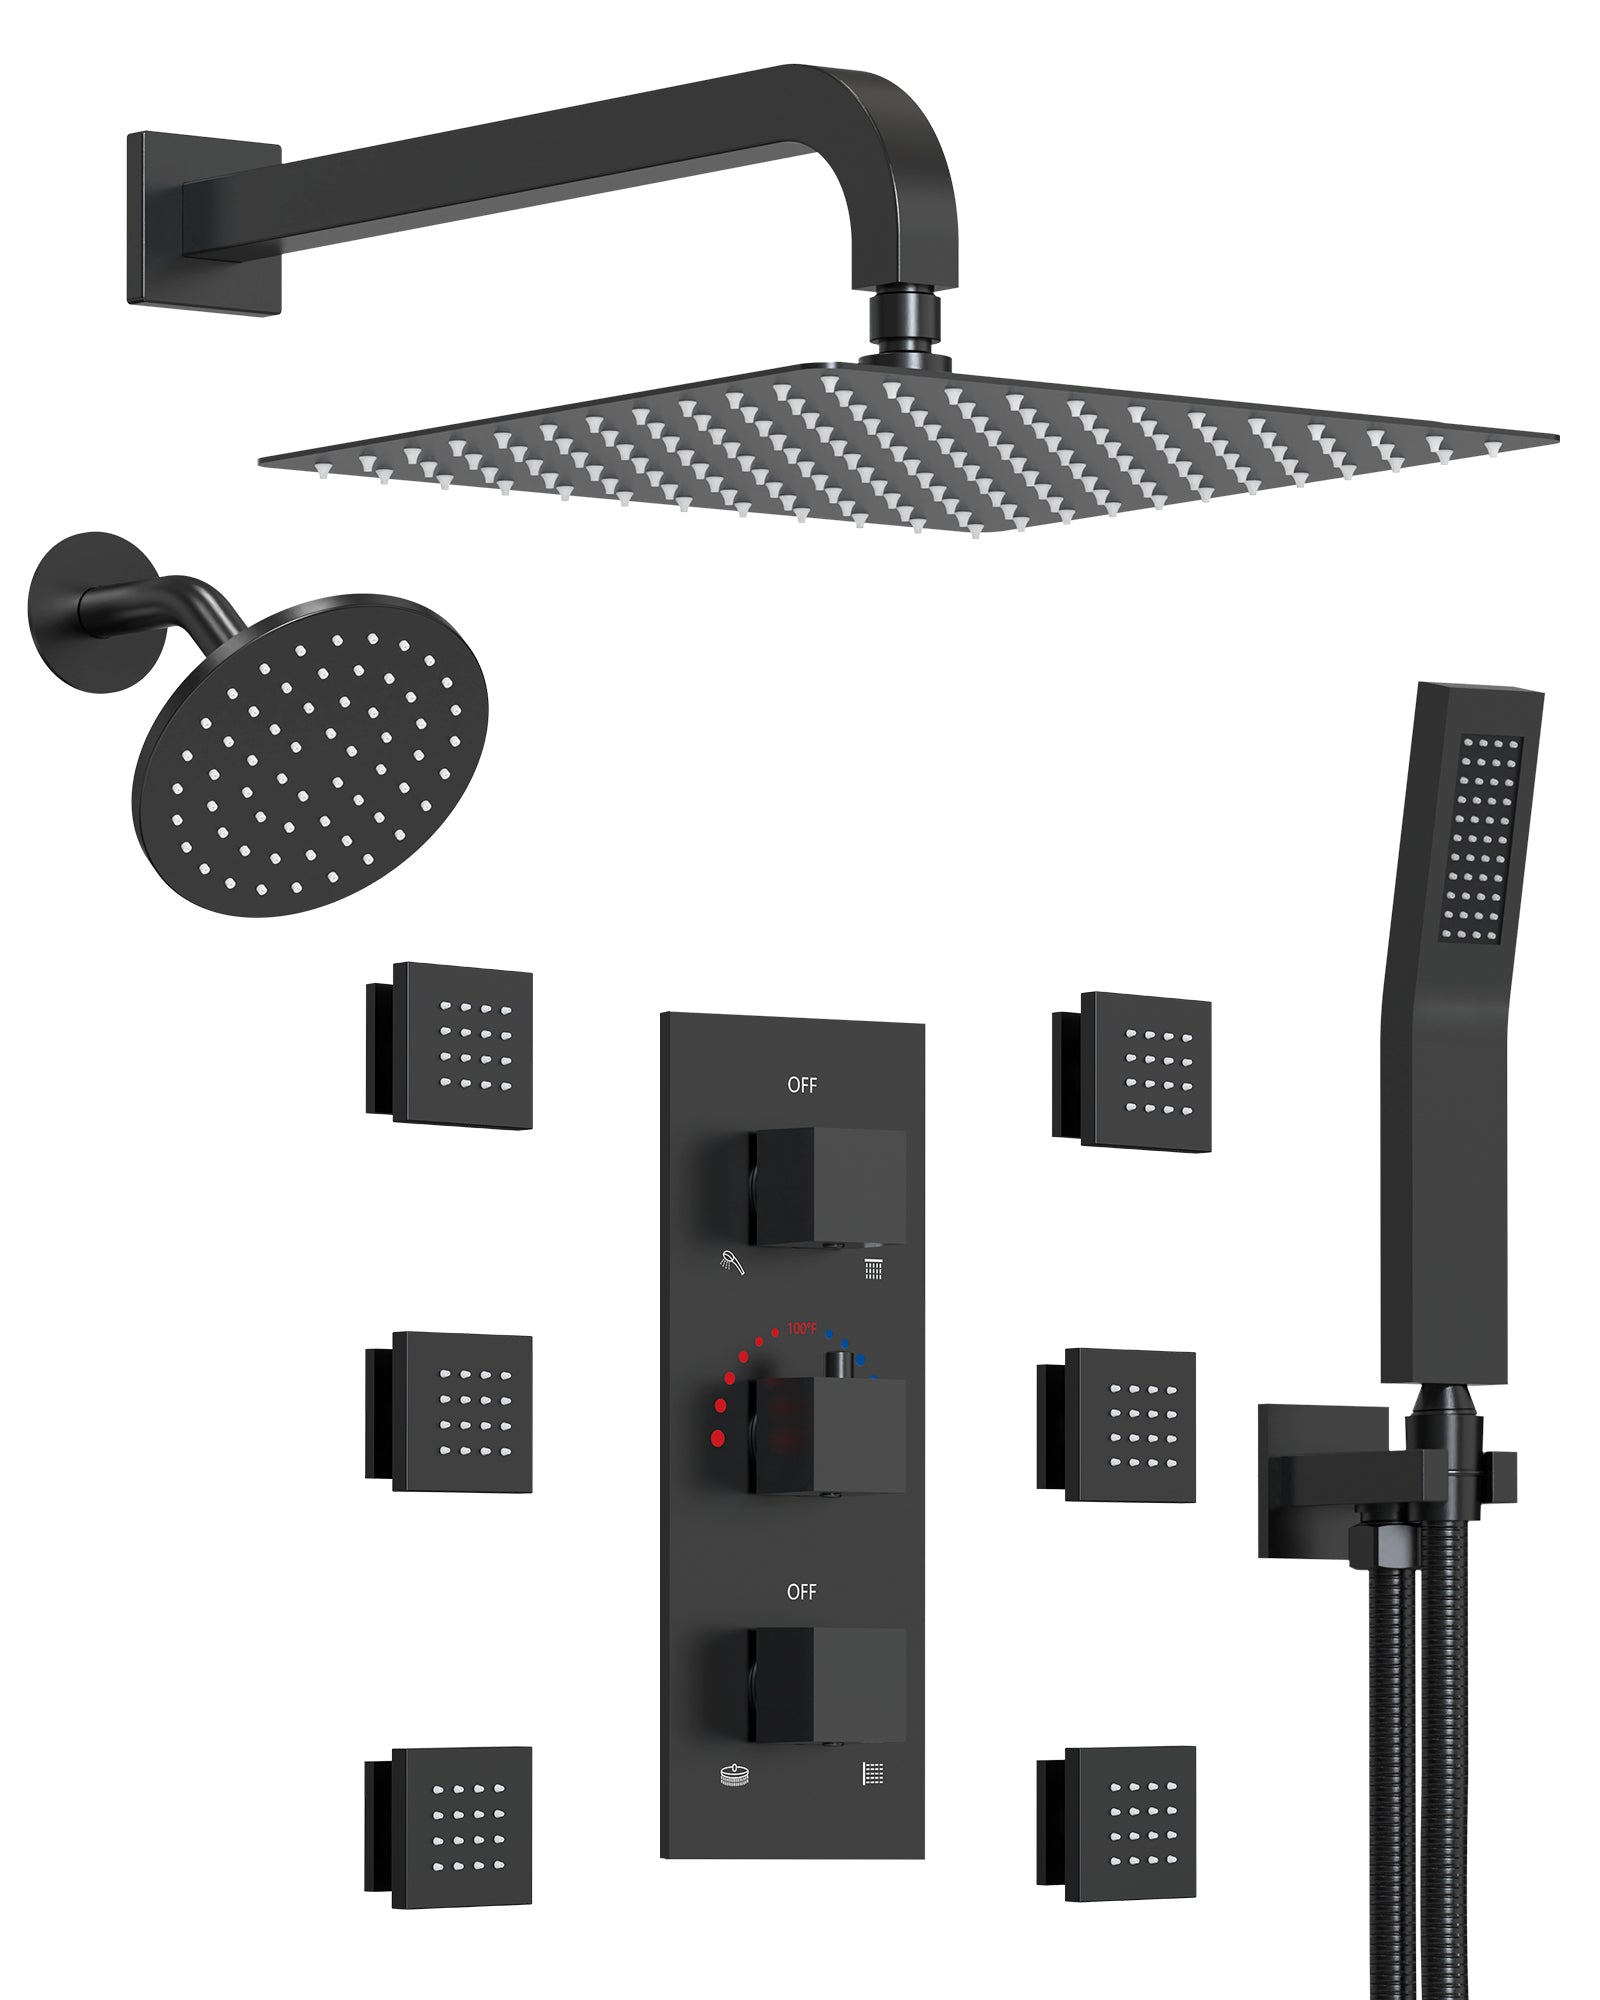 EVERSTEIN Matte Black Luxury Dual Rain Shower System - 12" Square Ceiling Head & Handheld Spray with Adjustable Massage Jets